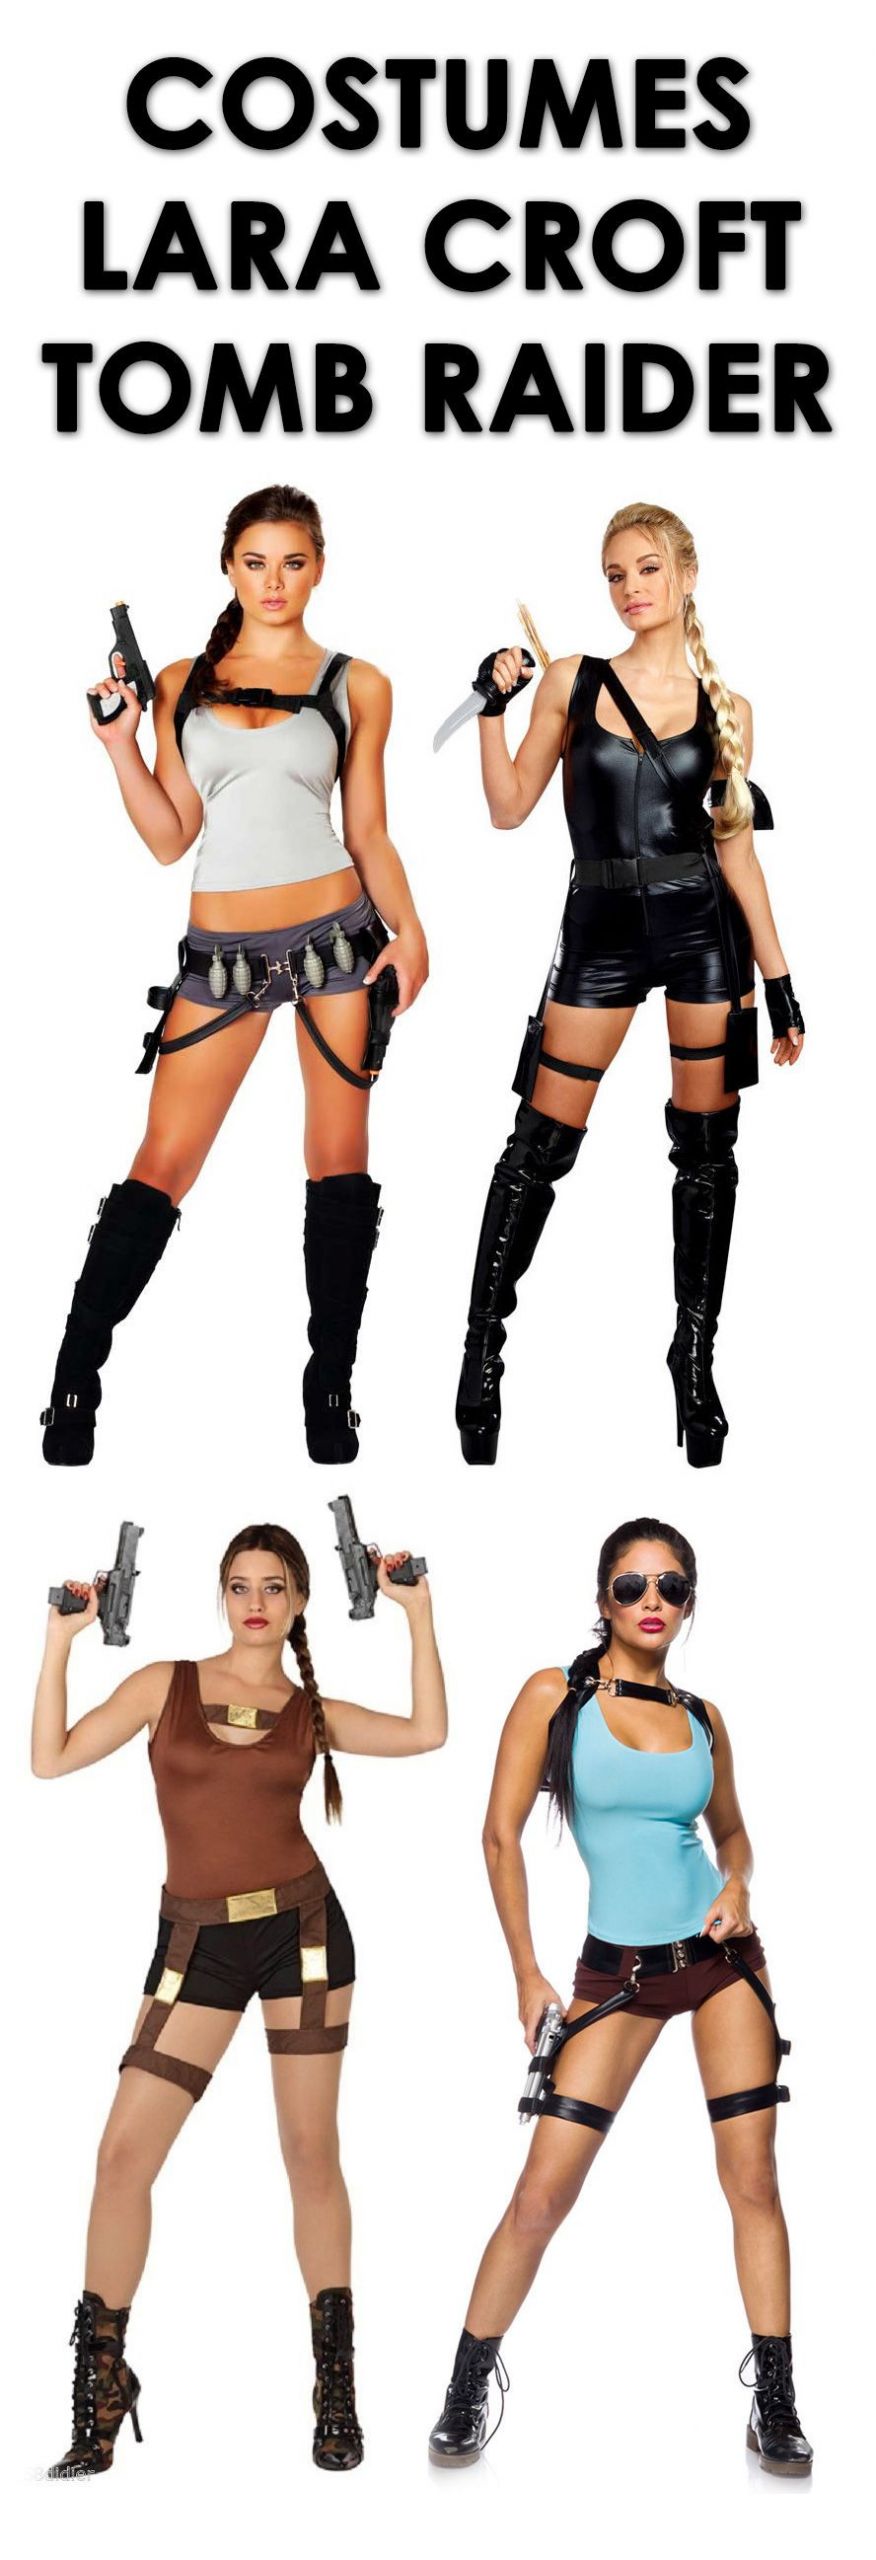 Tomb Raider Costume DIY
 Pin on Halloween Costumes